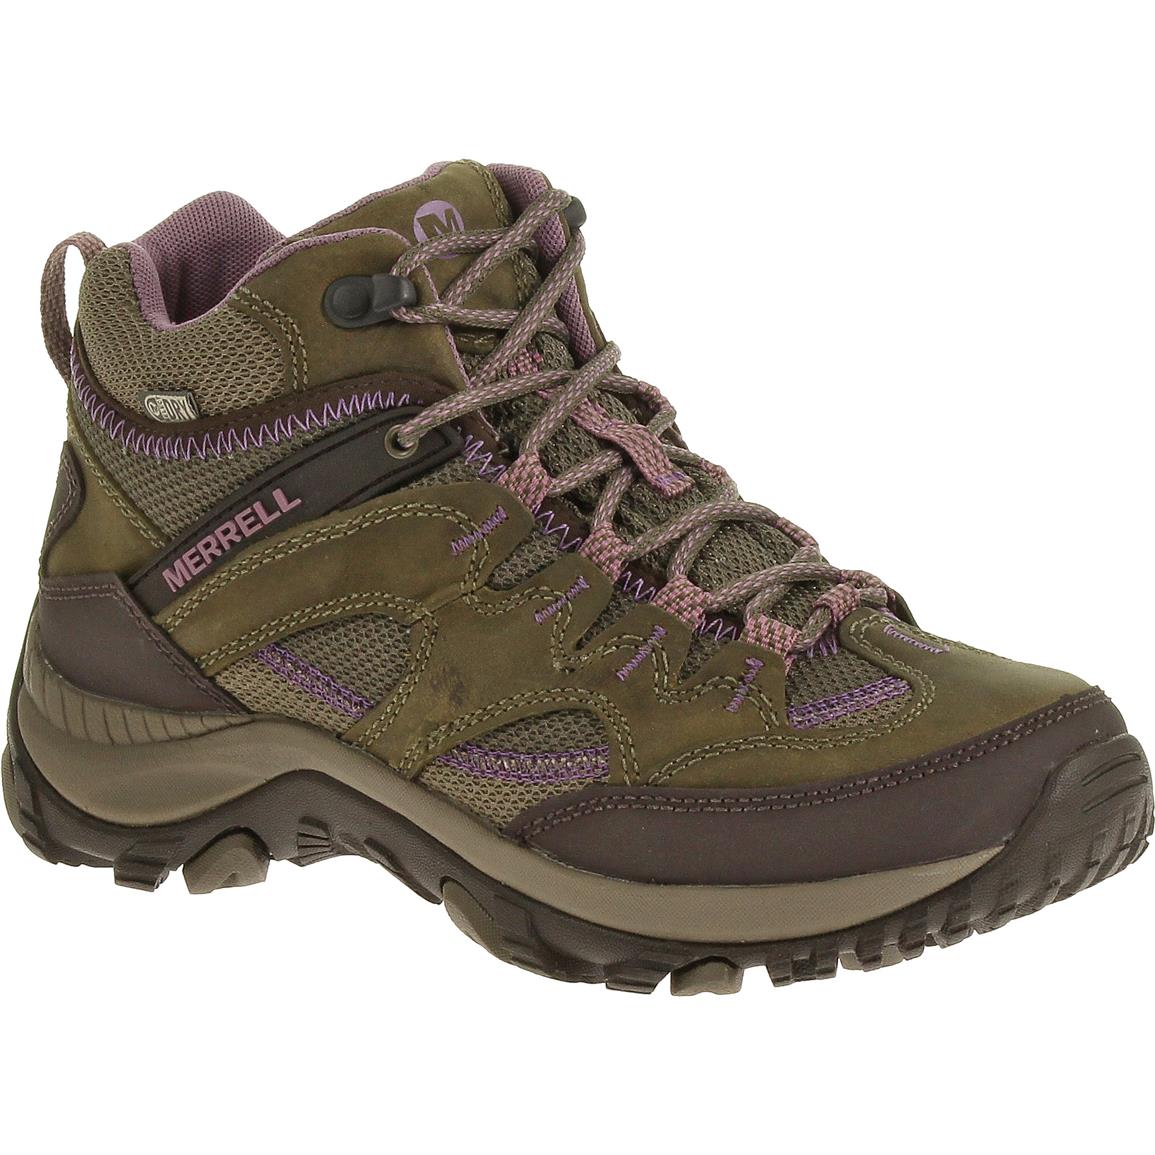 Women's Merrell Salida Hiking Boots, Waterproof, Mid, Brindle 654151